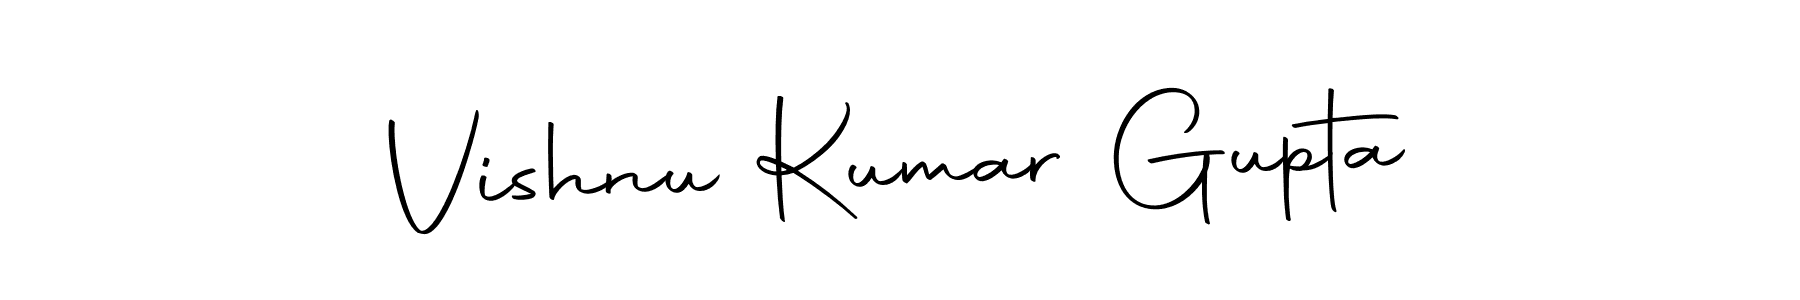 How to Draw Vishnu Kumar Gupta signature style? Autography-DOLnW is a latest design signature styles for name Vishnu Kumar Gupta. Vishnu Kumar Gupta signature style 10 images and pictures png